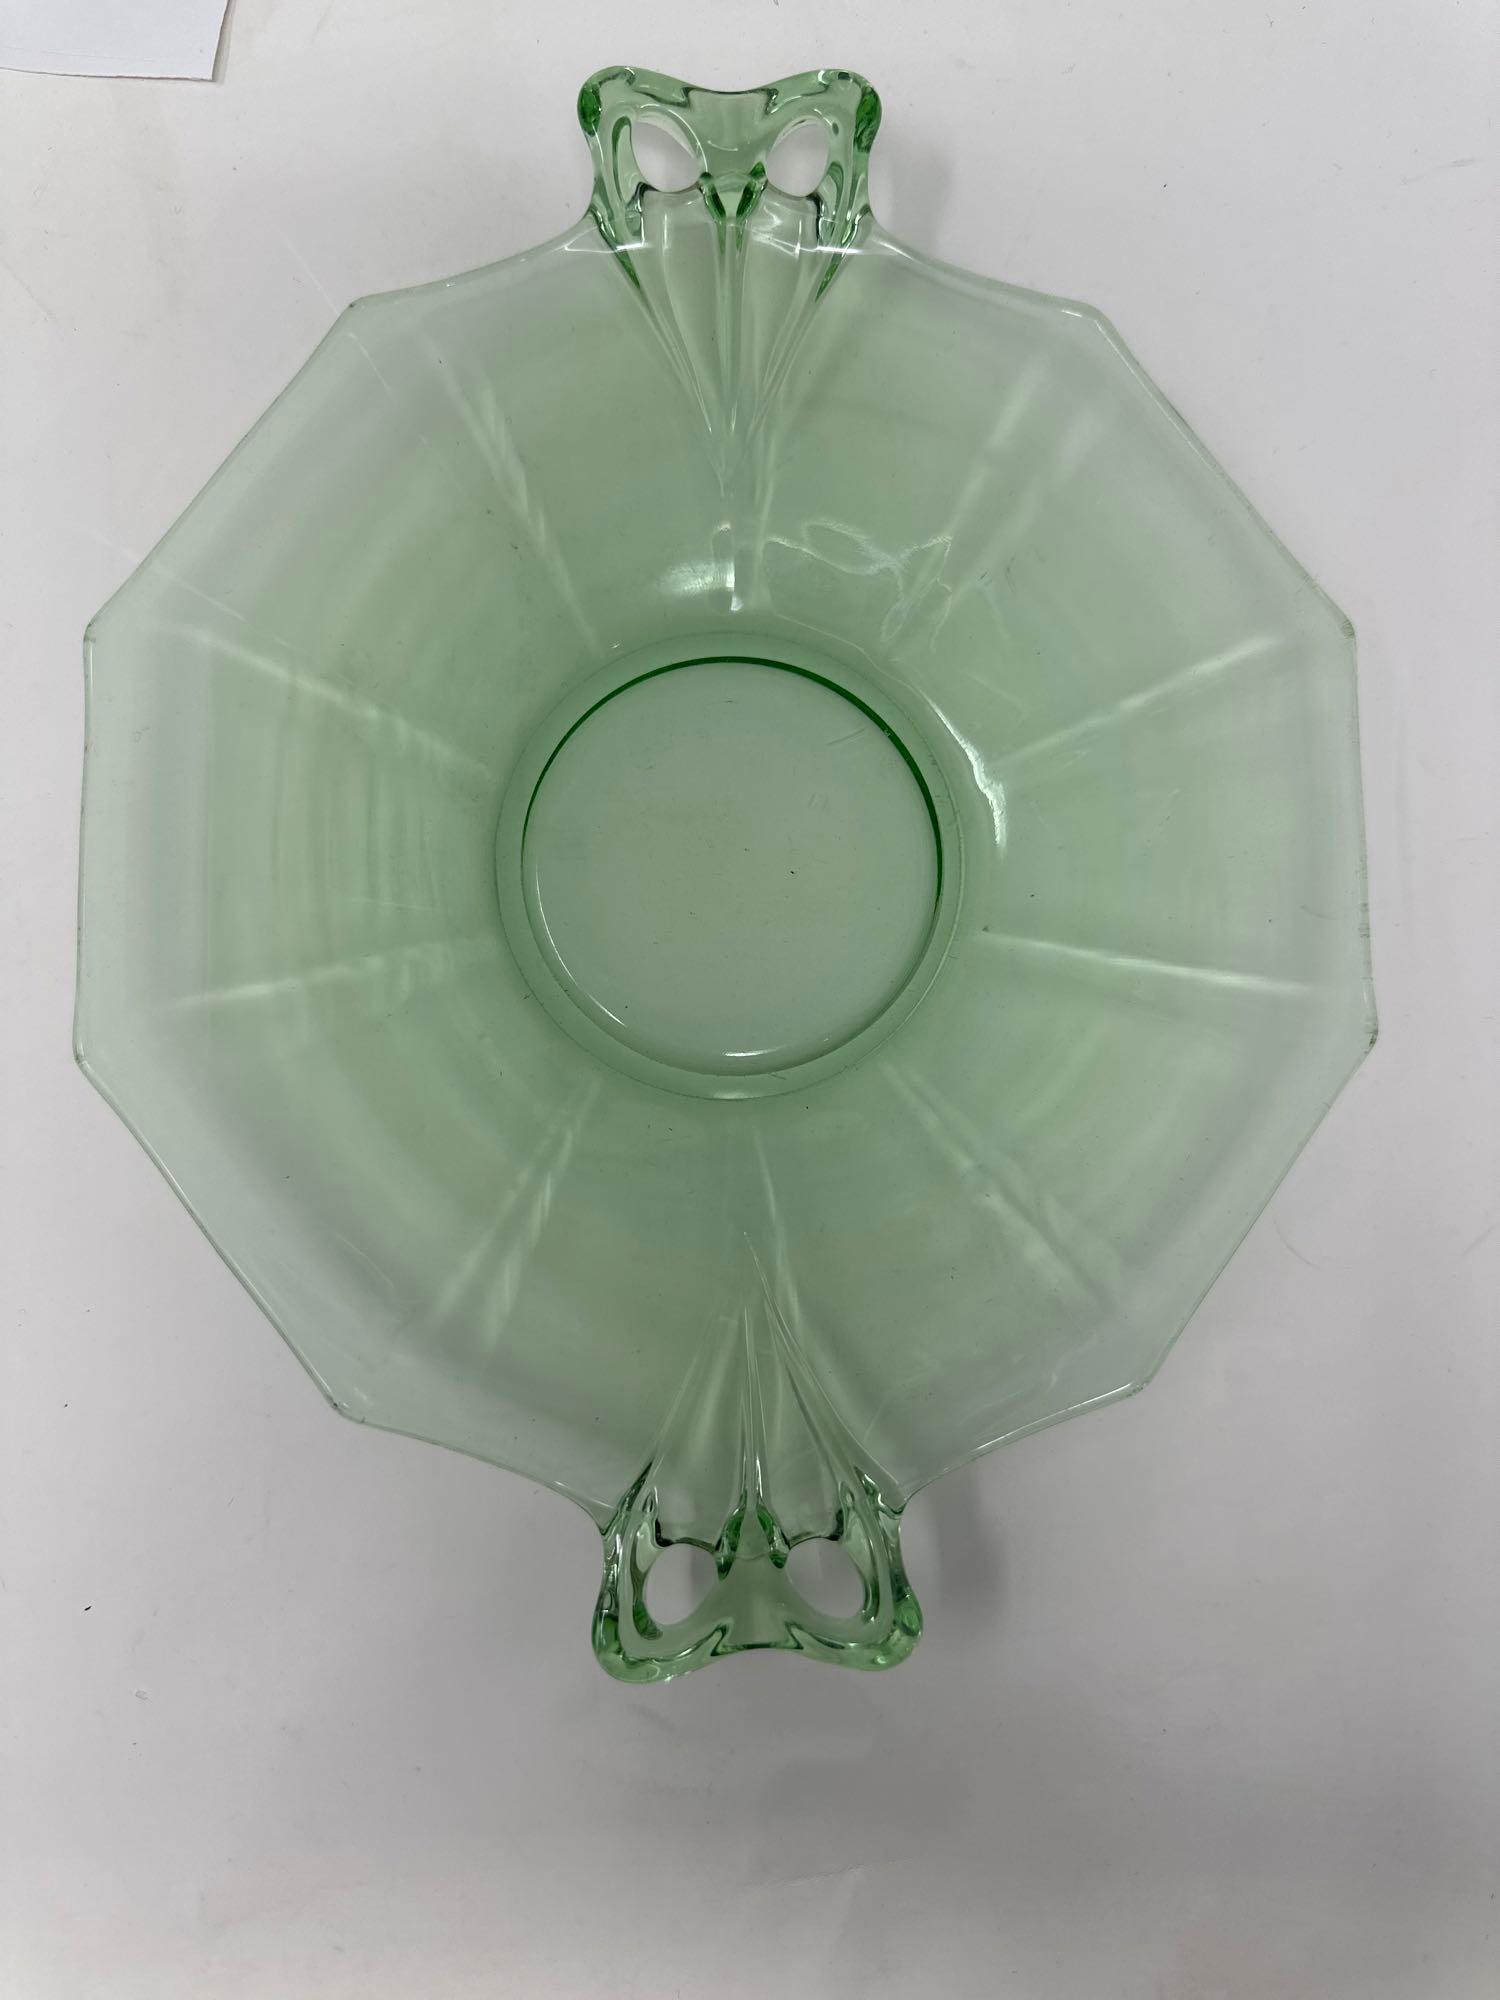 Antique uranium candy dish, plate (handled) and uranium juicers, green depression plate